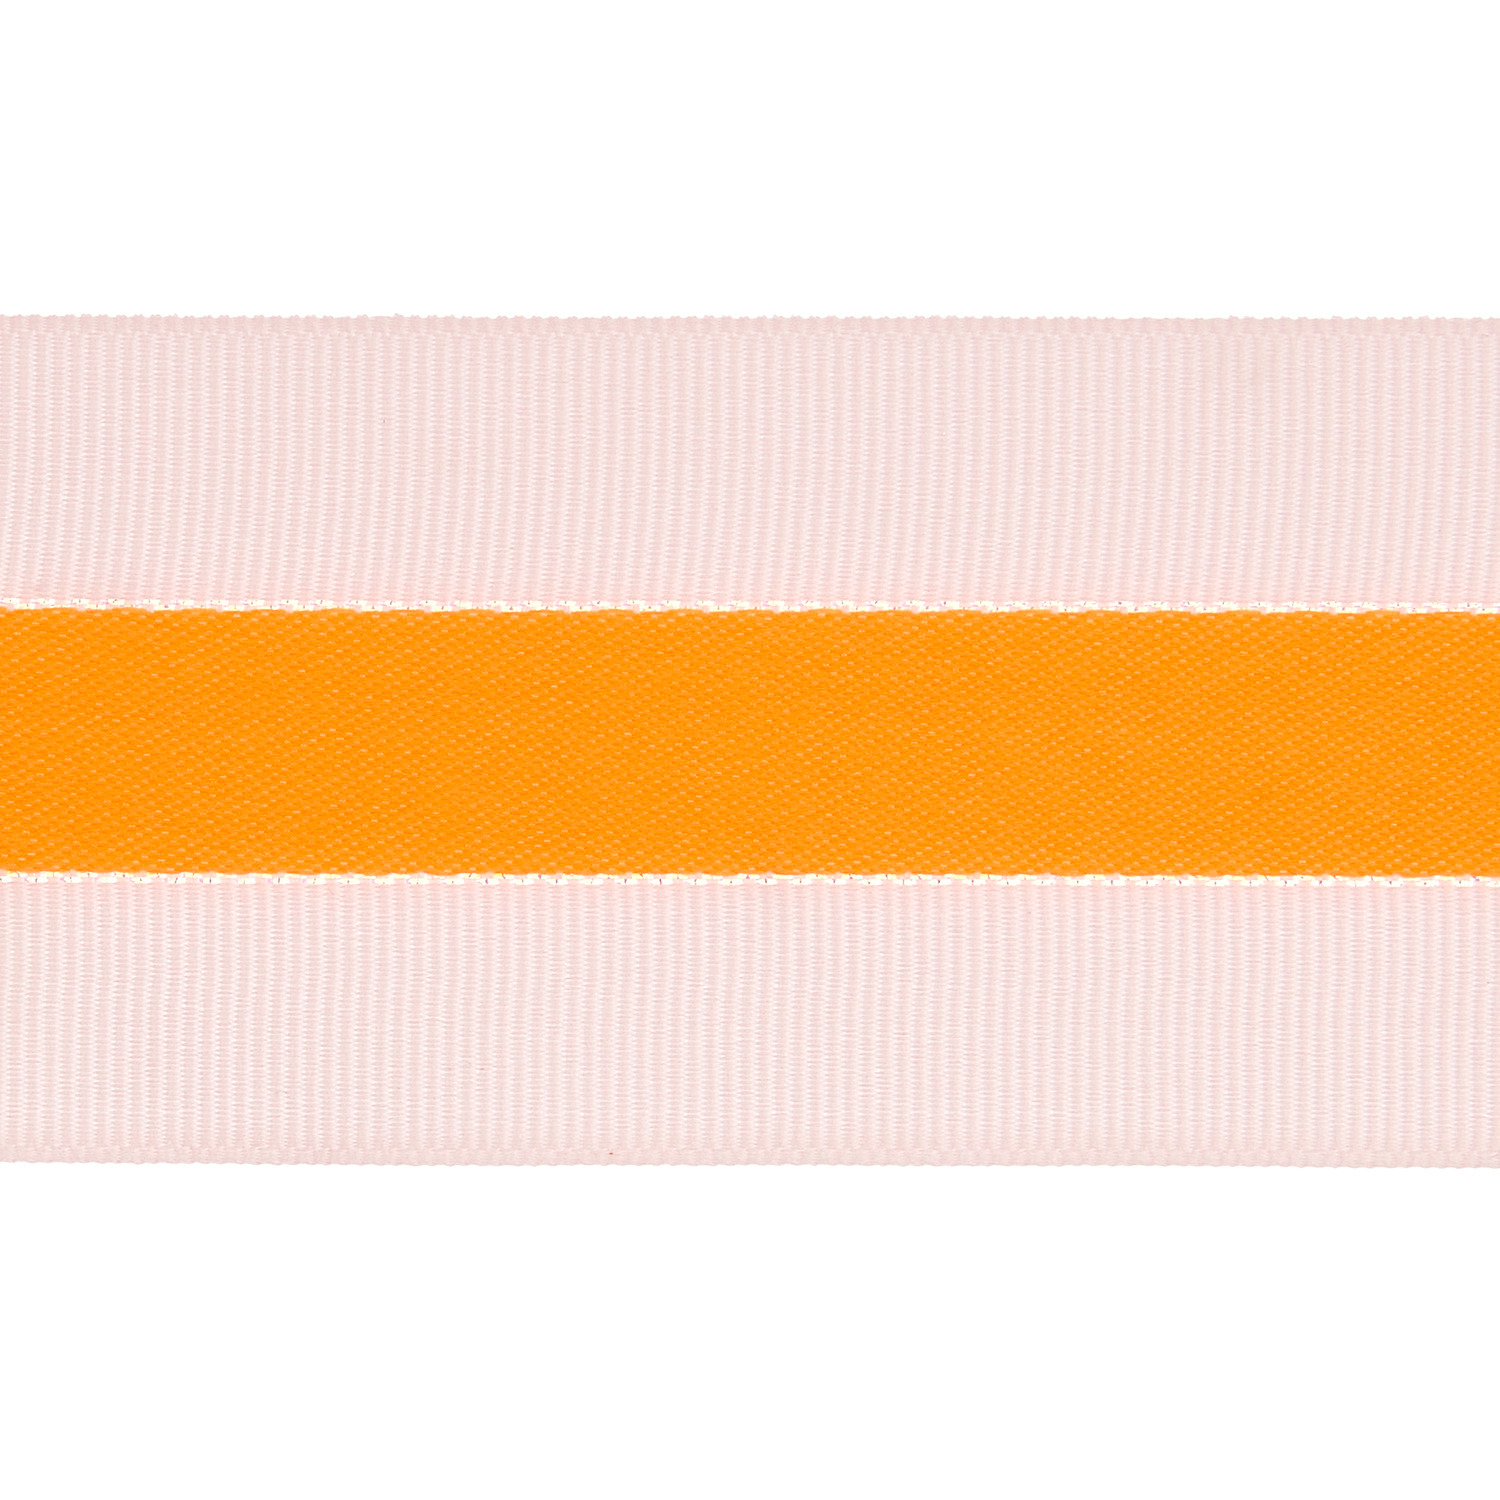 Paper Poetry Webband Duo Streifen Apricot/Neon Orange